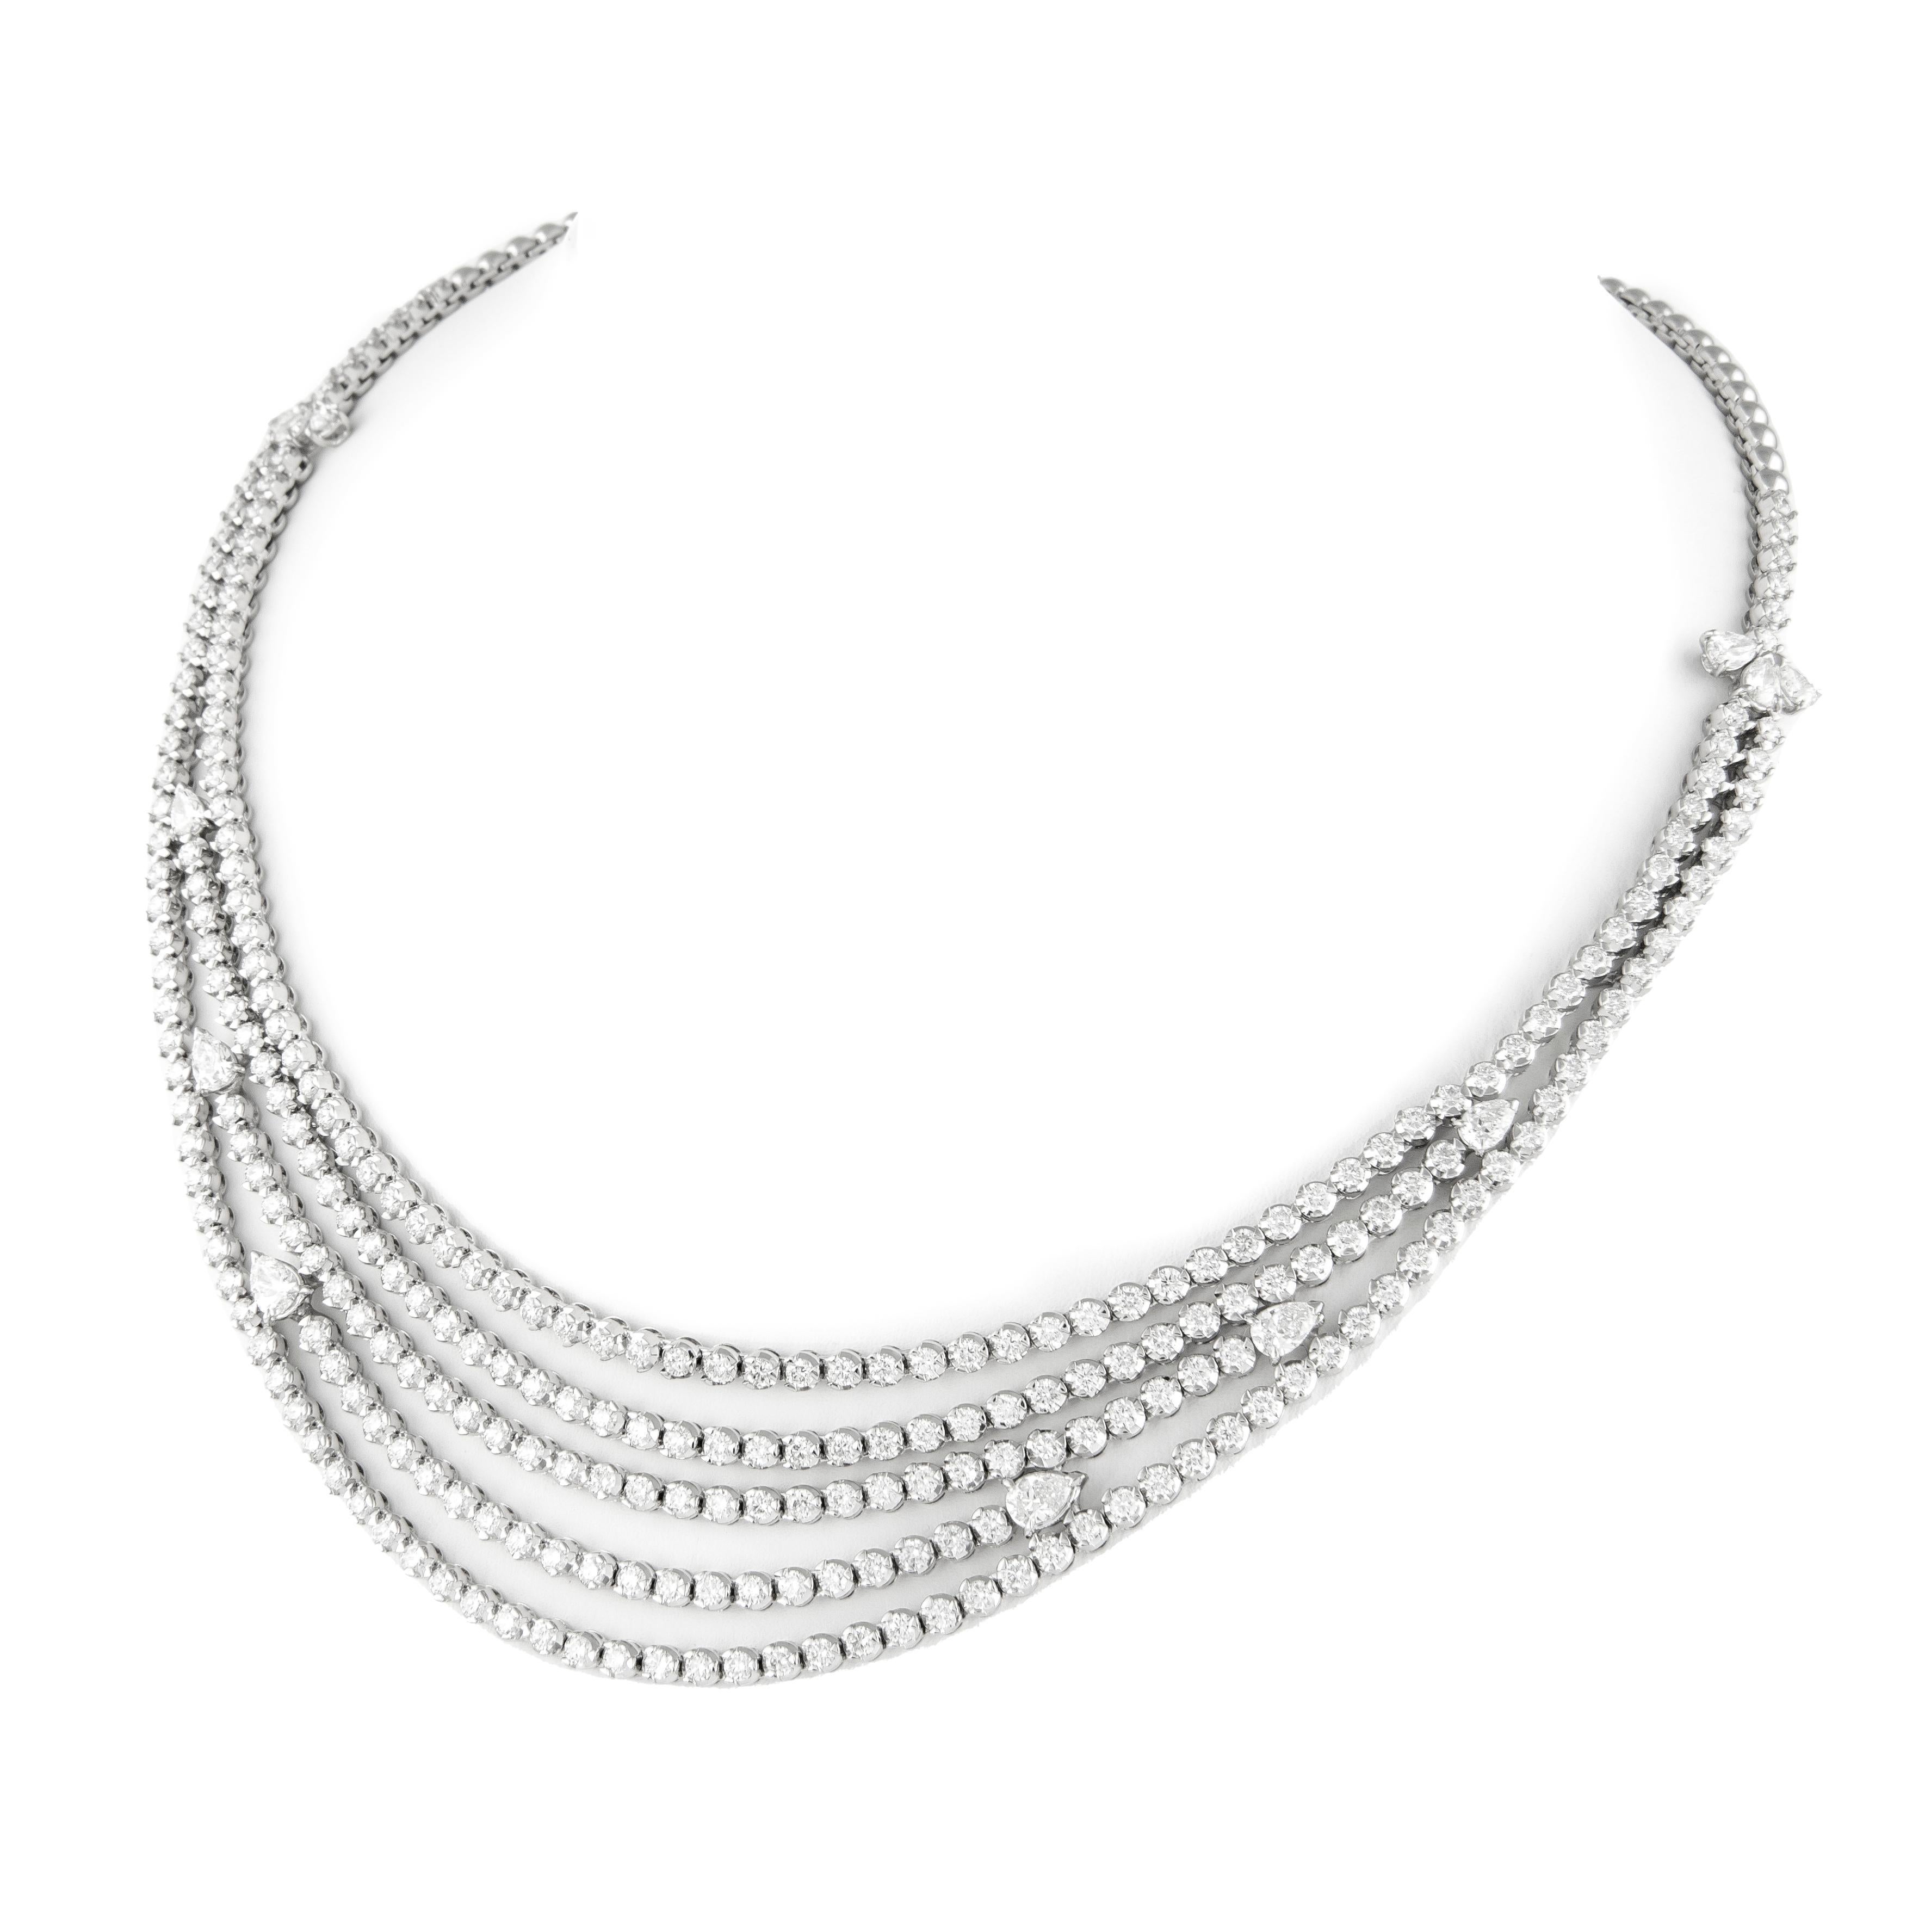 Contemporary Alexander 11.83 Carat Diamond White Gold 5-Row Tennis Necklace